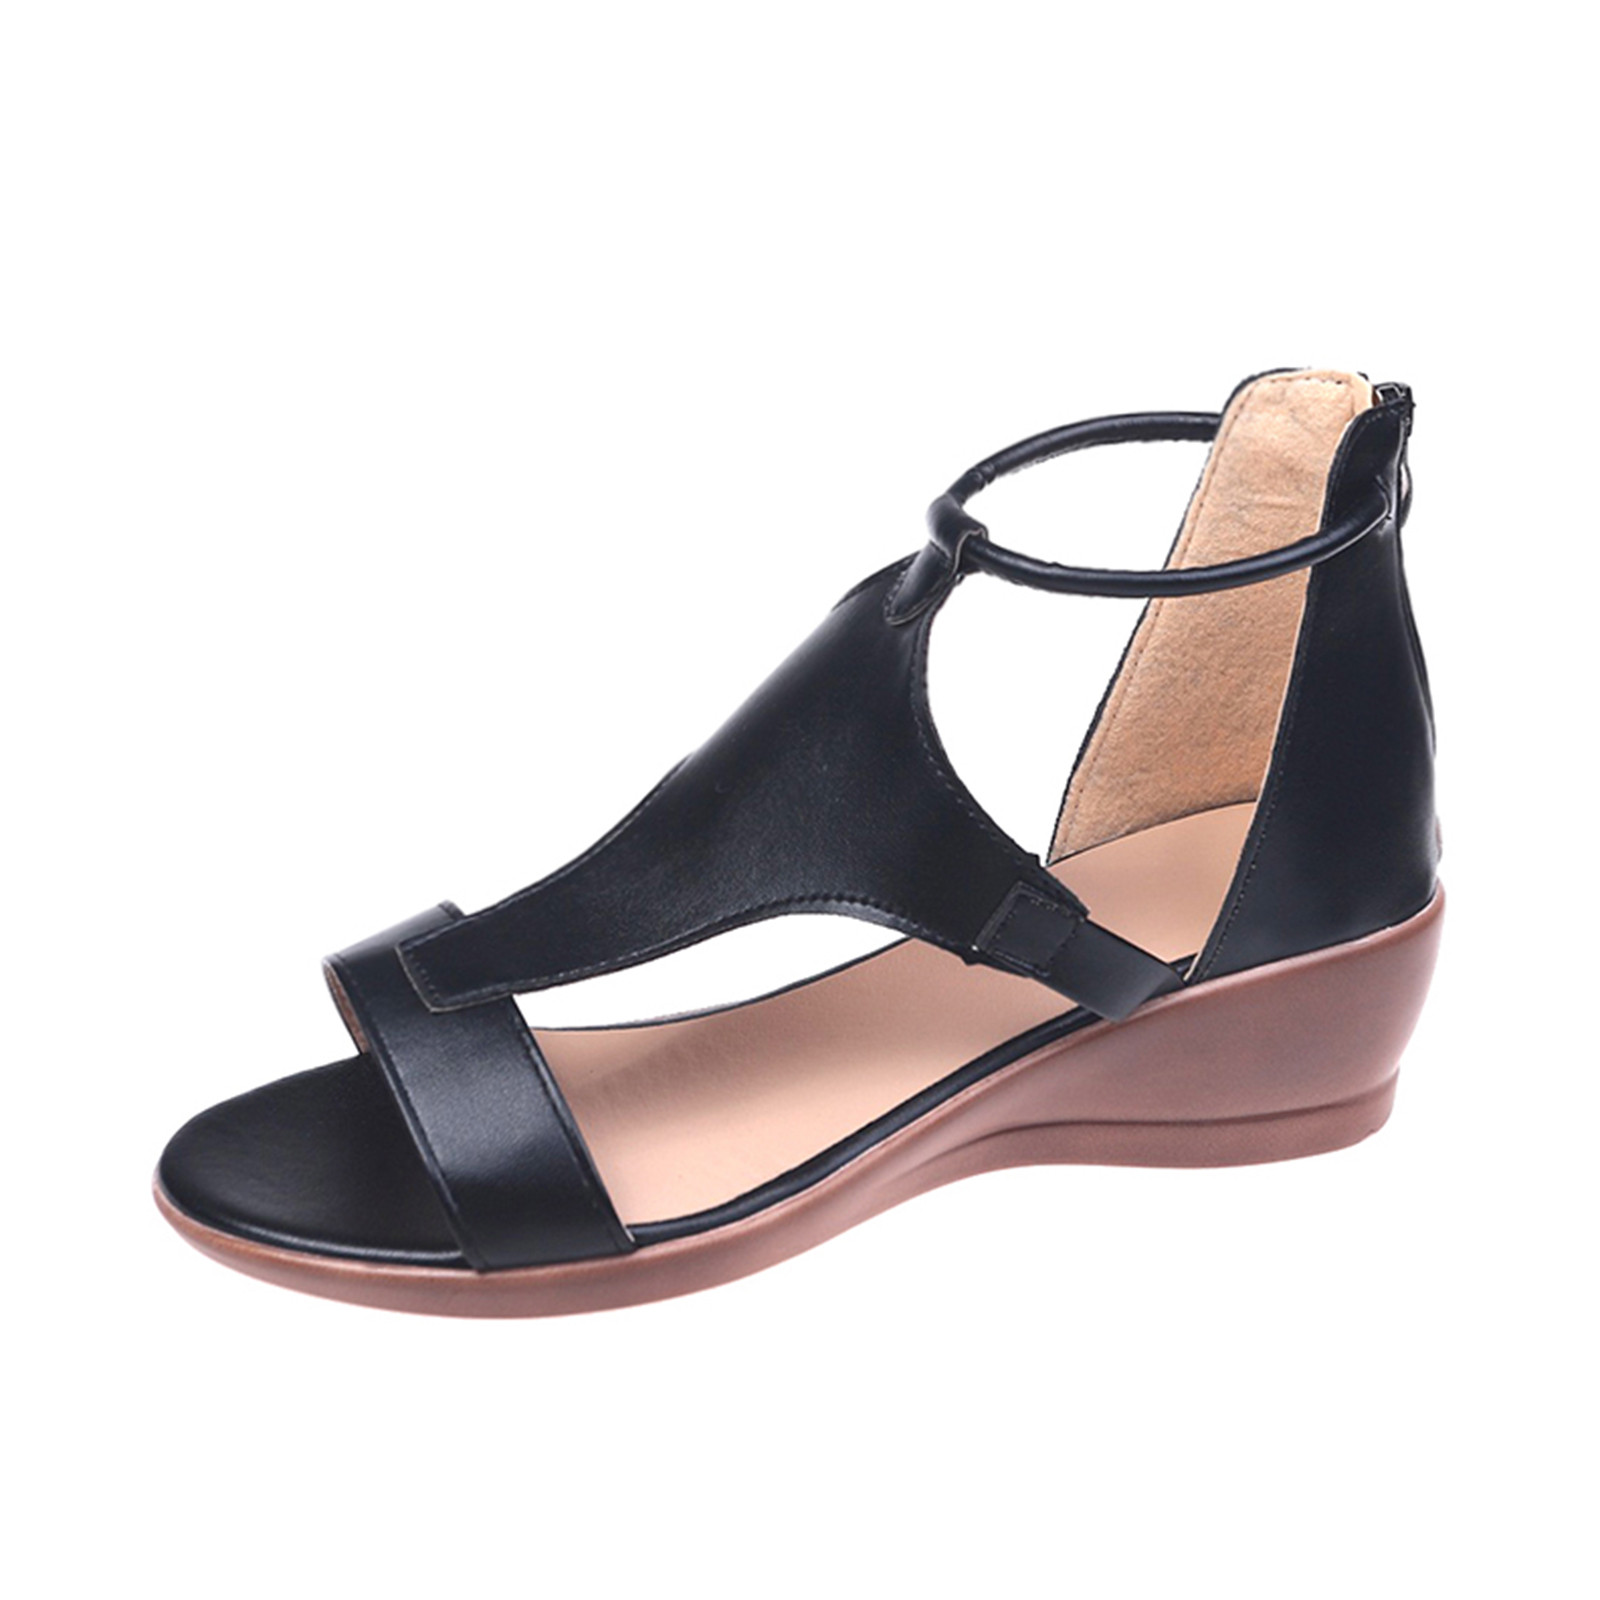 Sandals Women Summer Womens Open Toe Platform Casual Shoes Solid Color ...